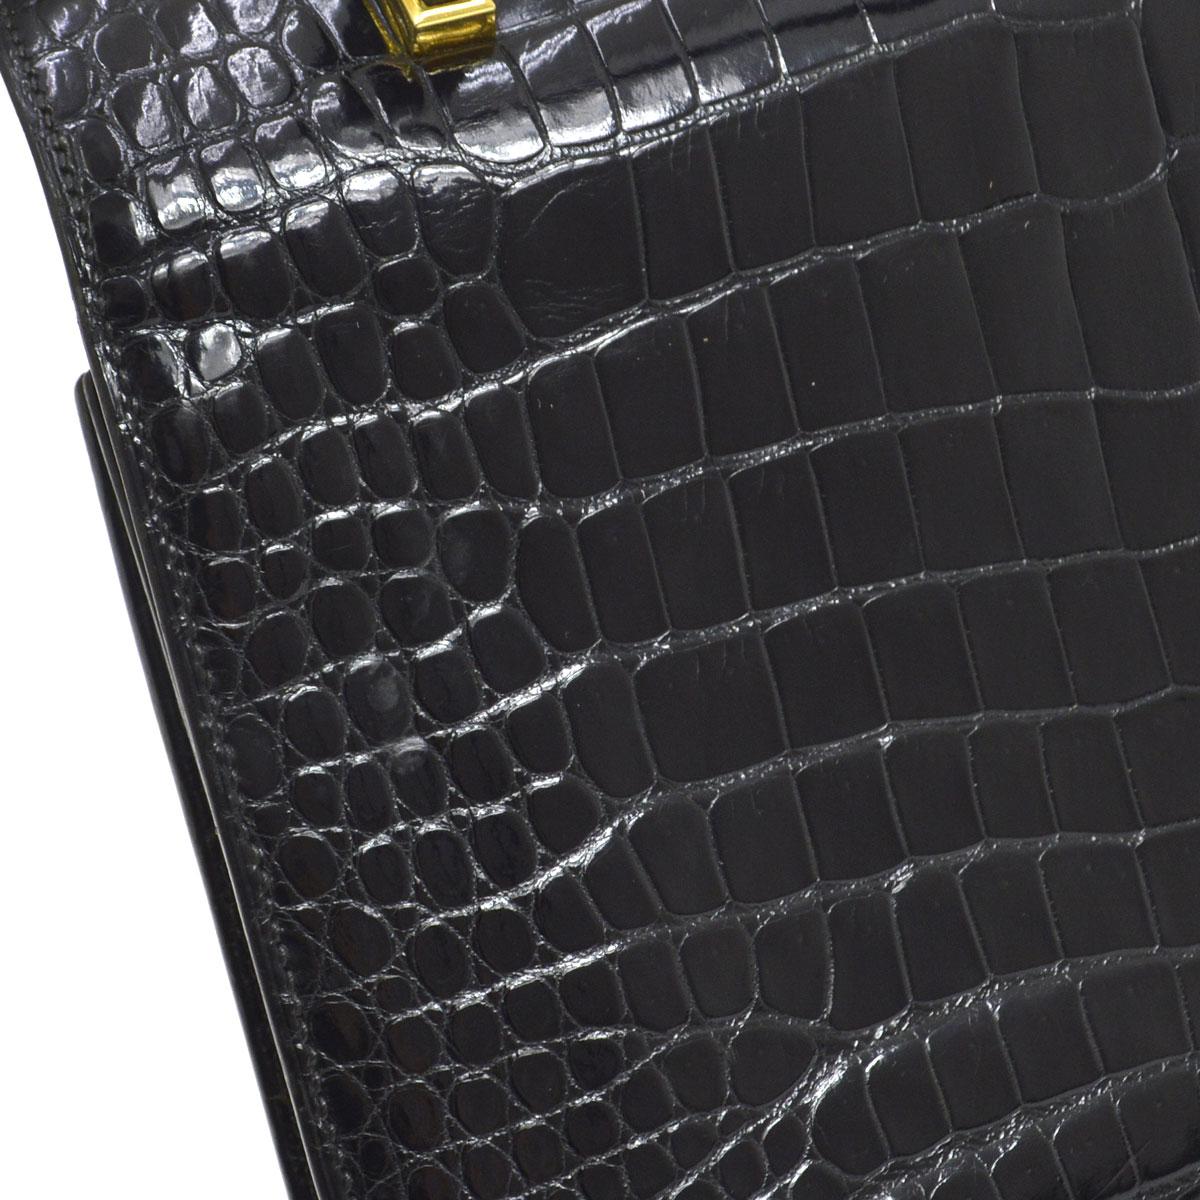 Hermes Rare Black Leather Gold Emblem Evening Kelly Style Top Handle Satchel Bag

Crocodile leather
Gold tone hardware
Leather lining
Made in France
Handle drop 4.5